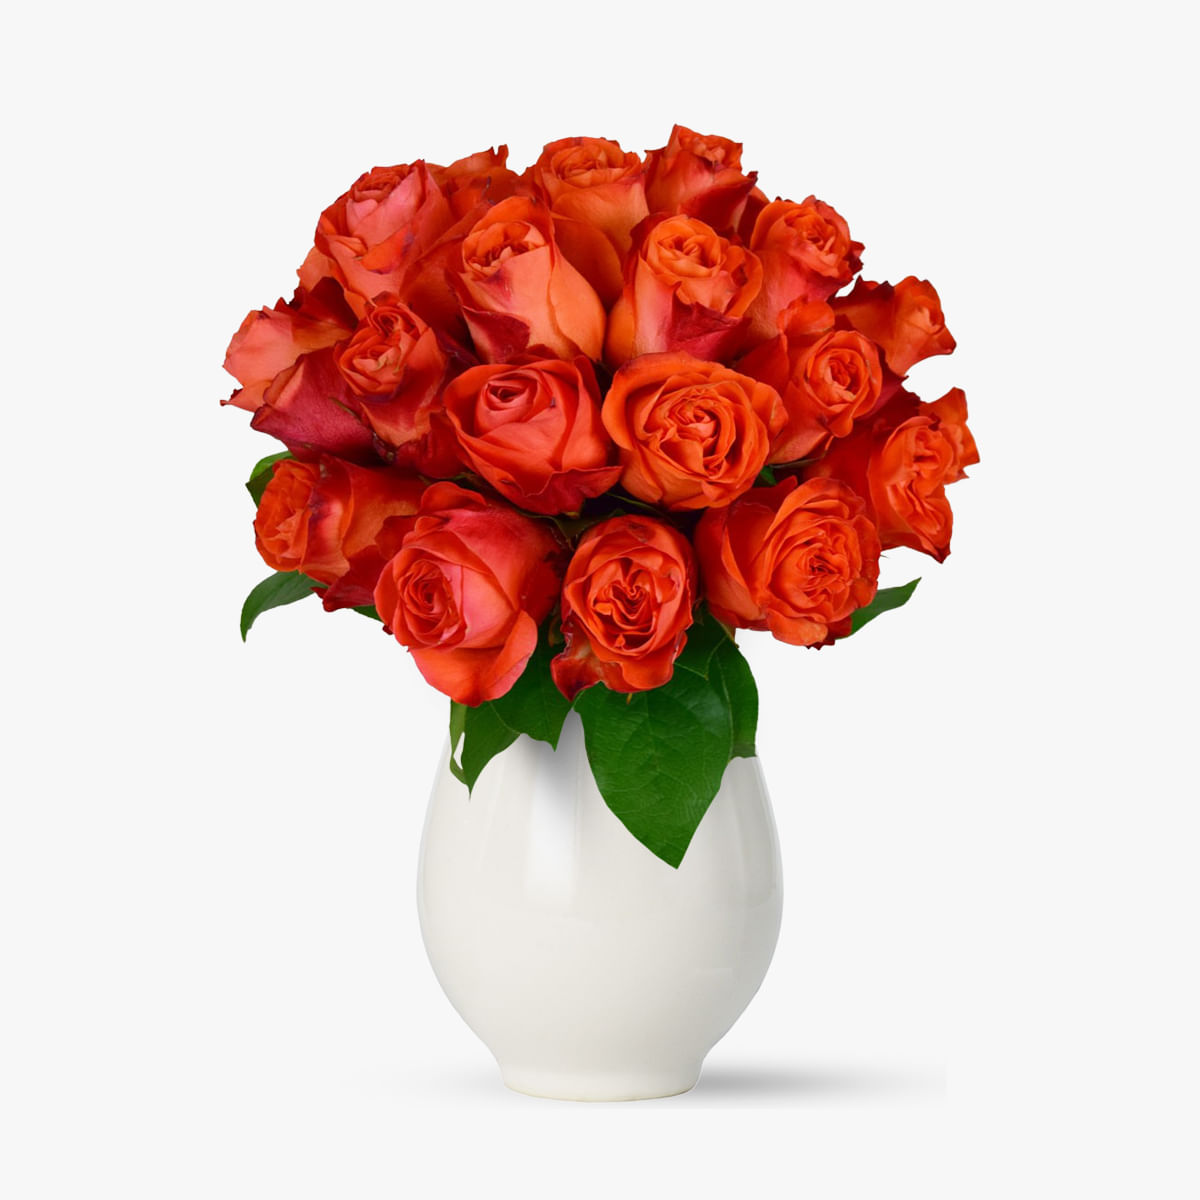 Buchet de 25 trandafiri portocalii – Standard Buchet